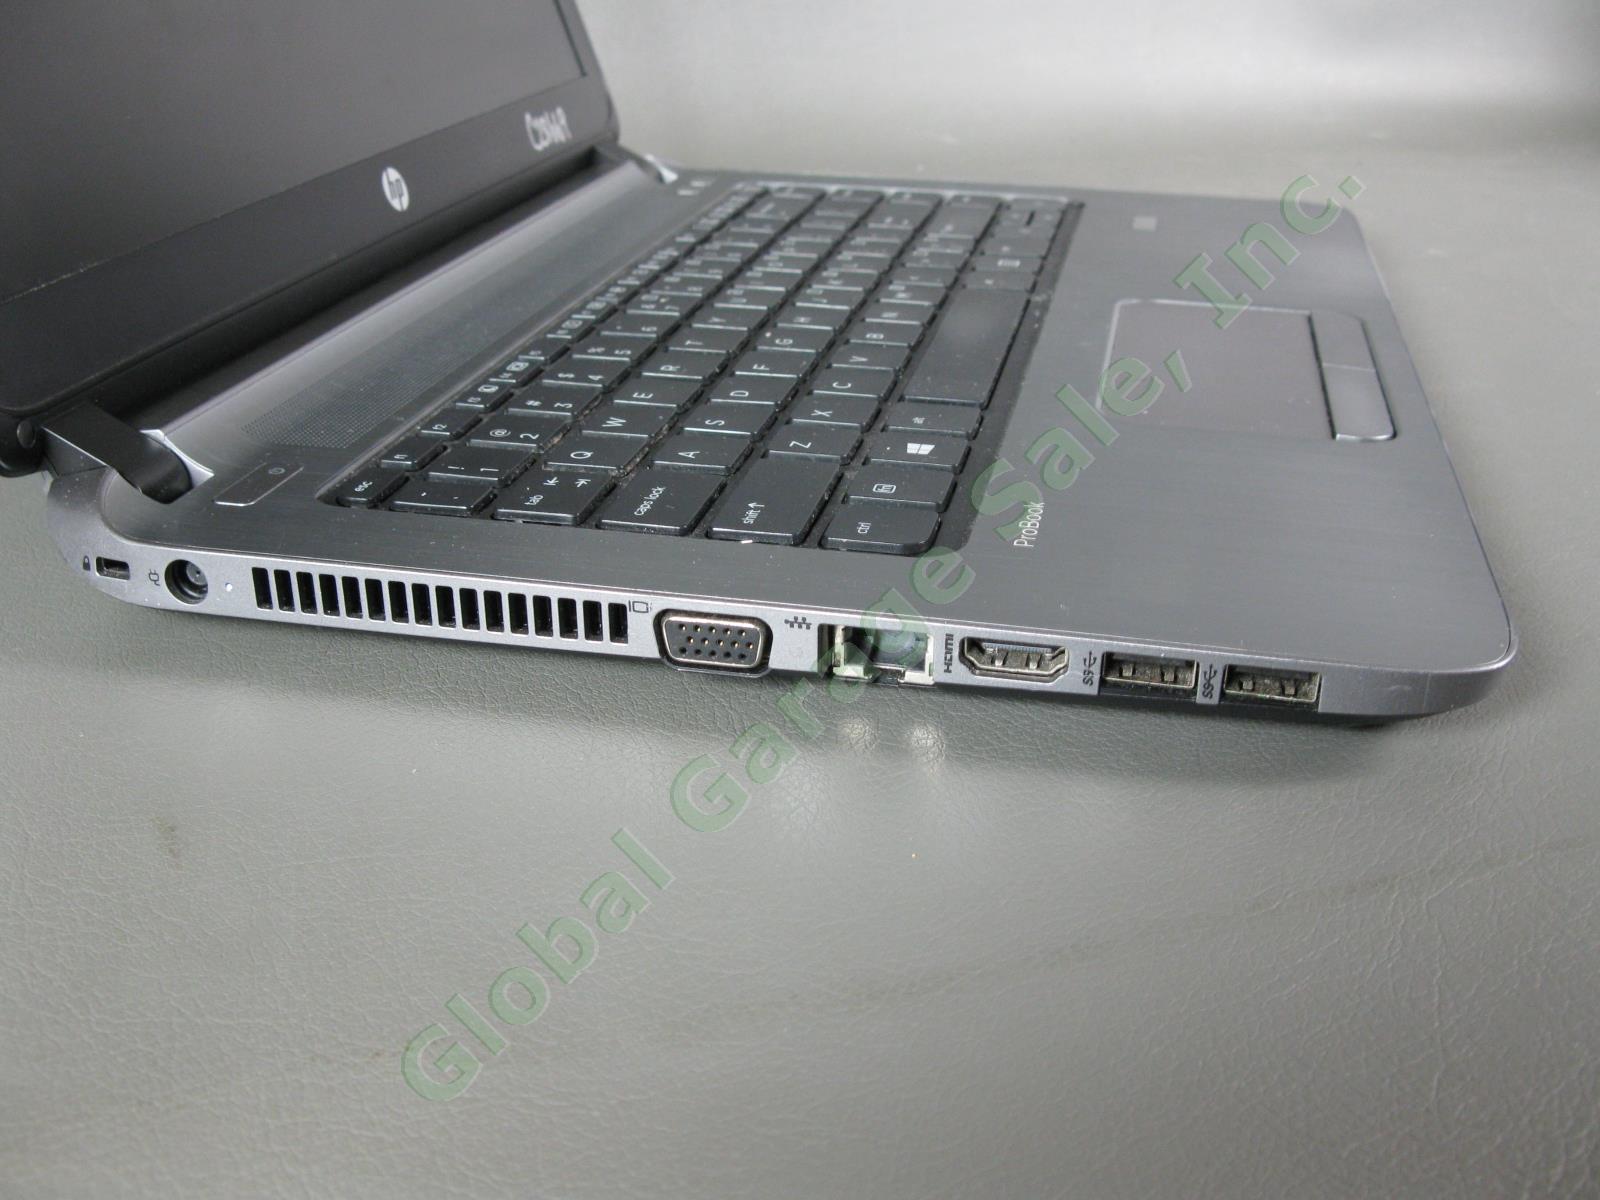 HP ProBook Laptop 440 G2 i5-5200U 2.20GHz 4GB RAM 460GB HD Windows 10 Great DEAL 2